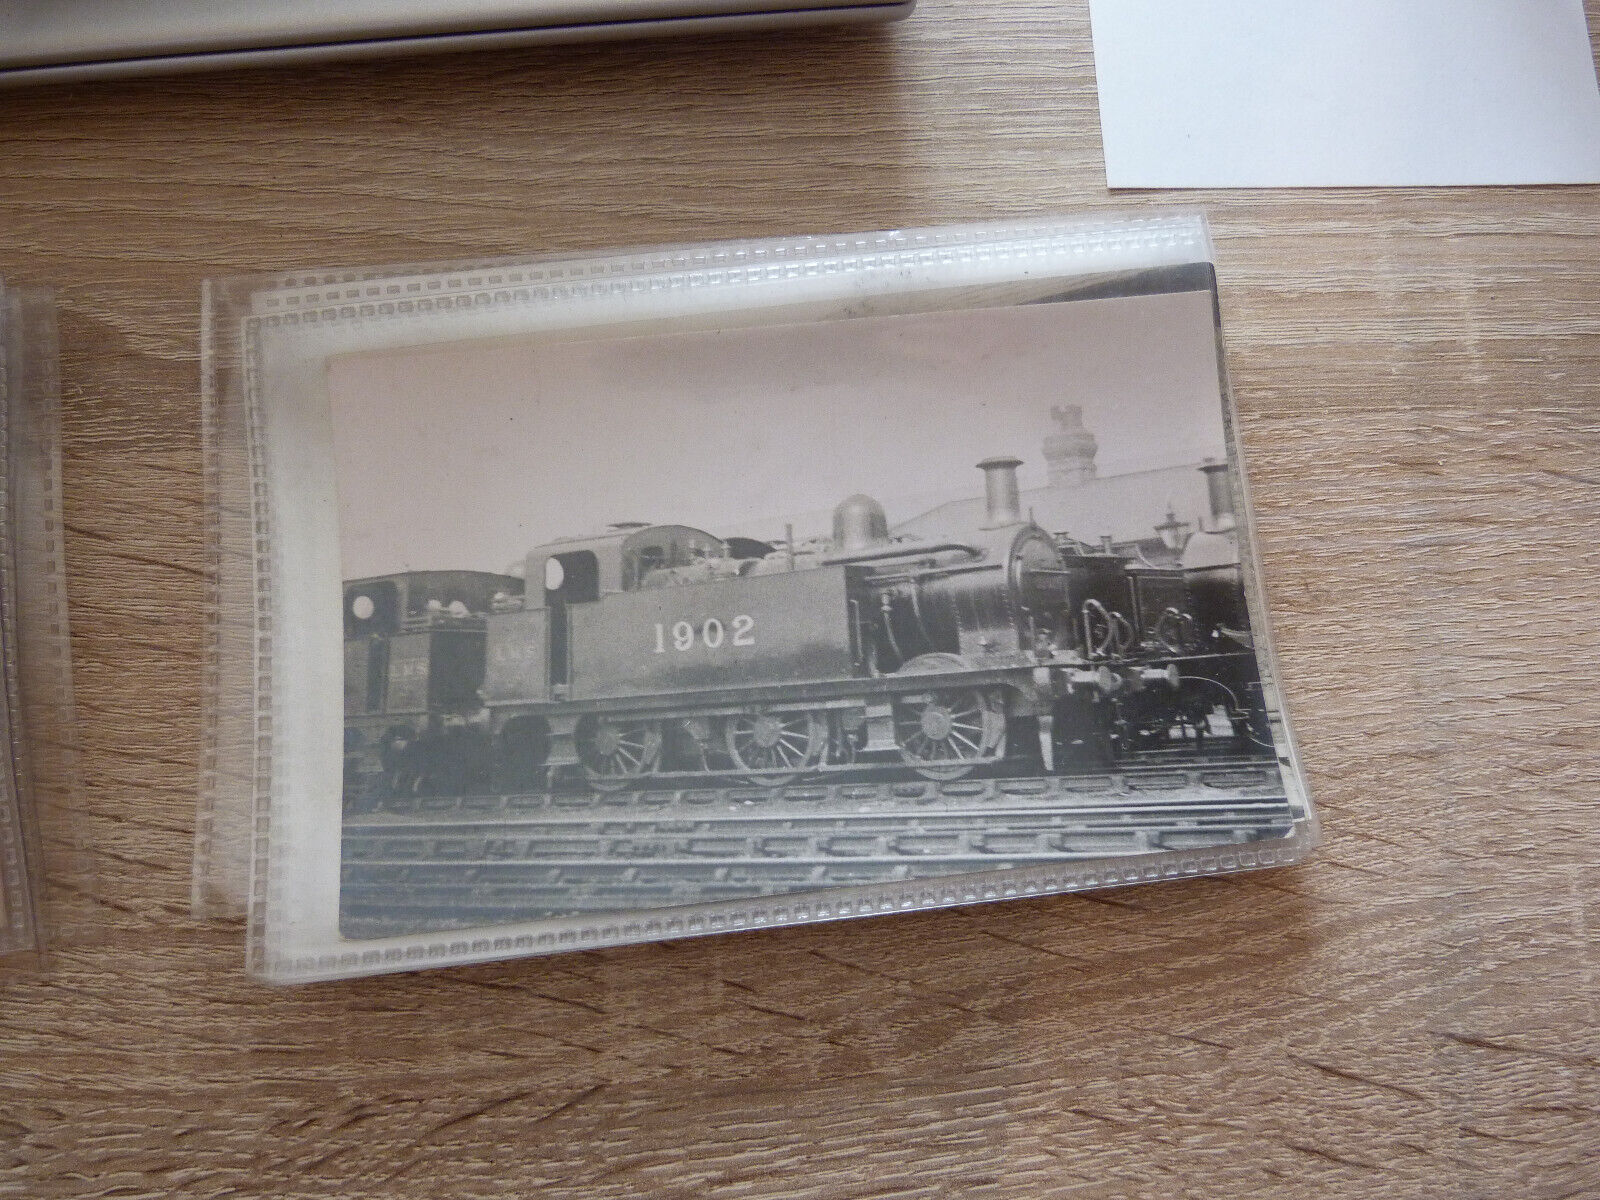 LMS locomotive 1902 at Derby c1924 (H181)